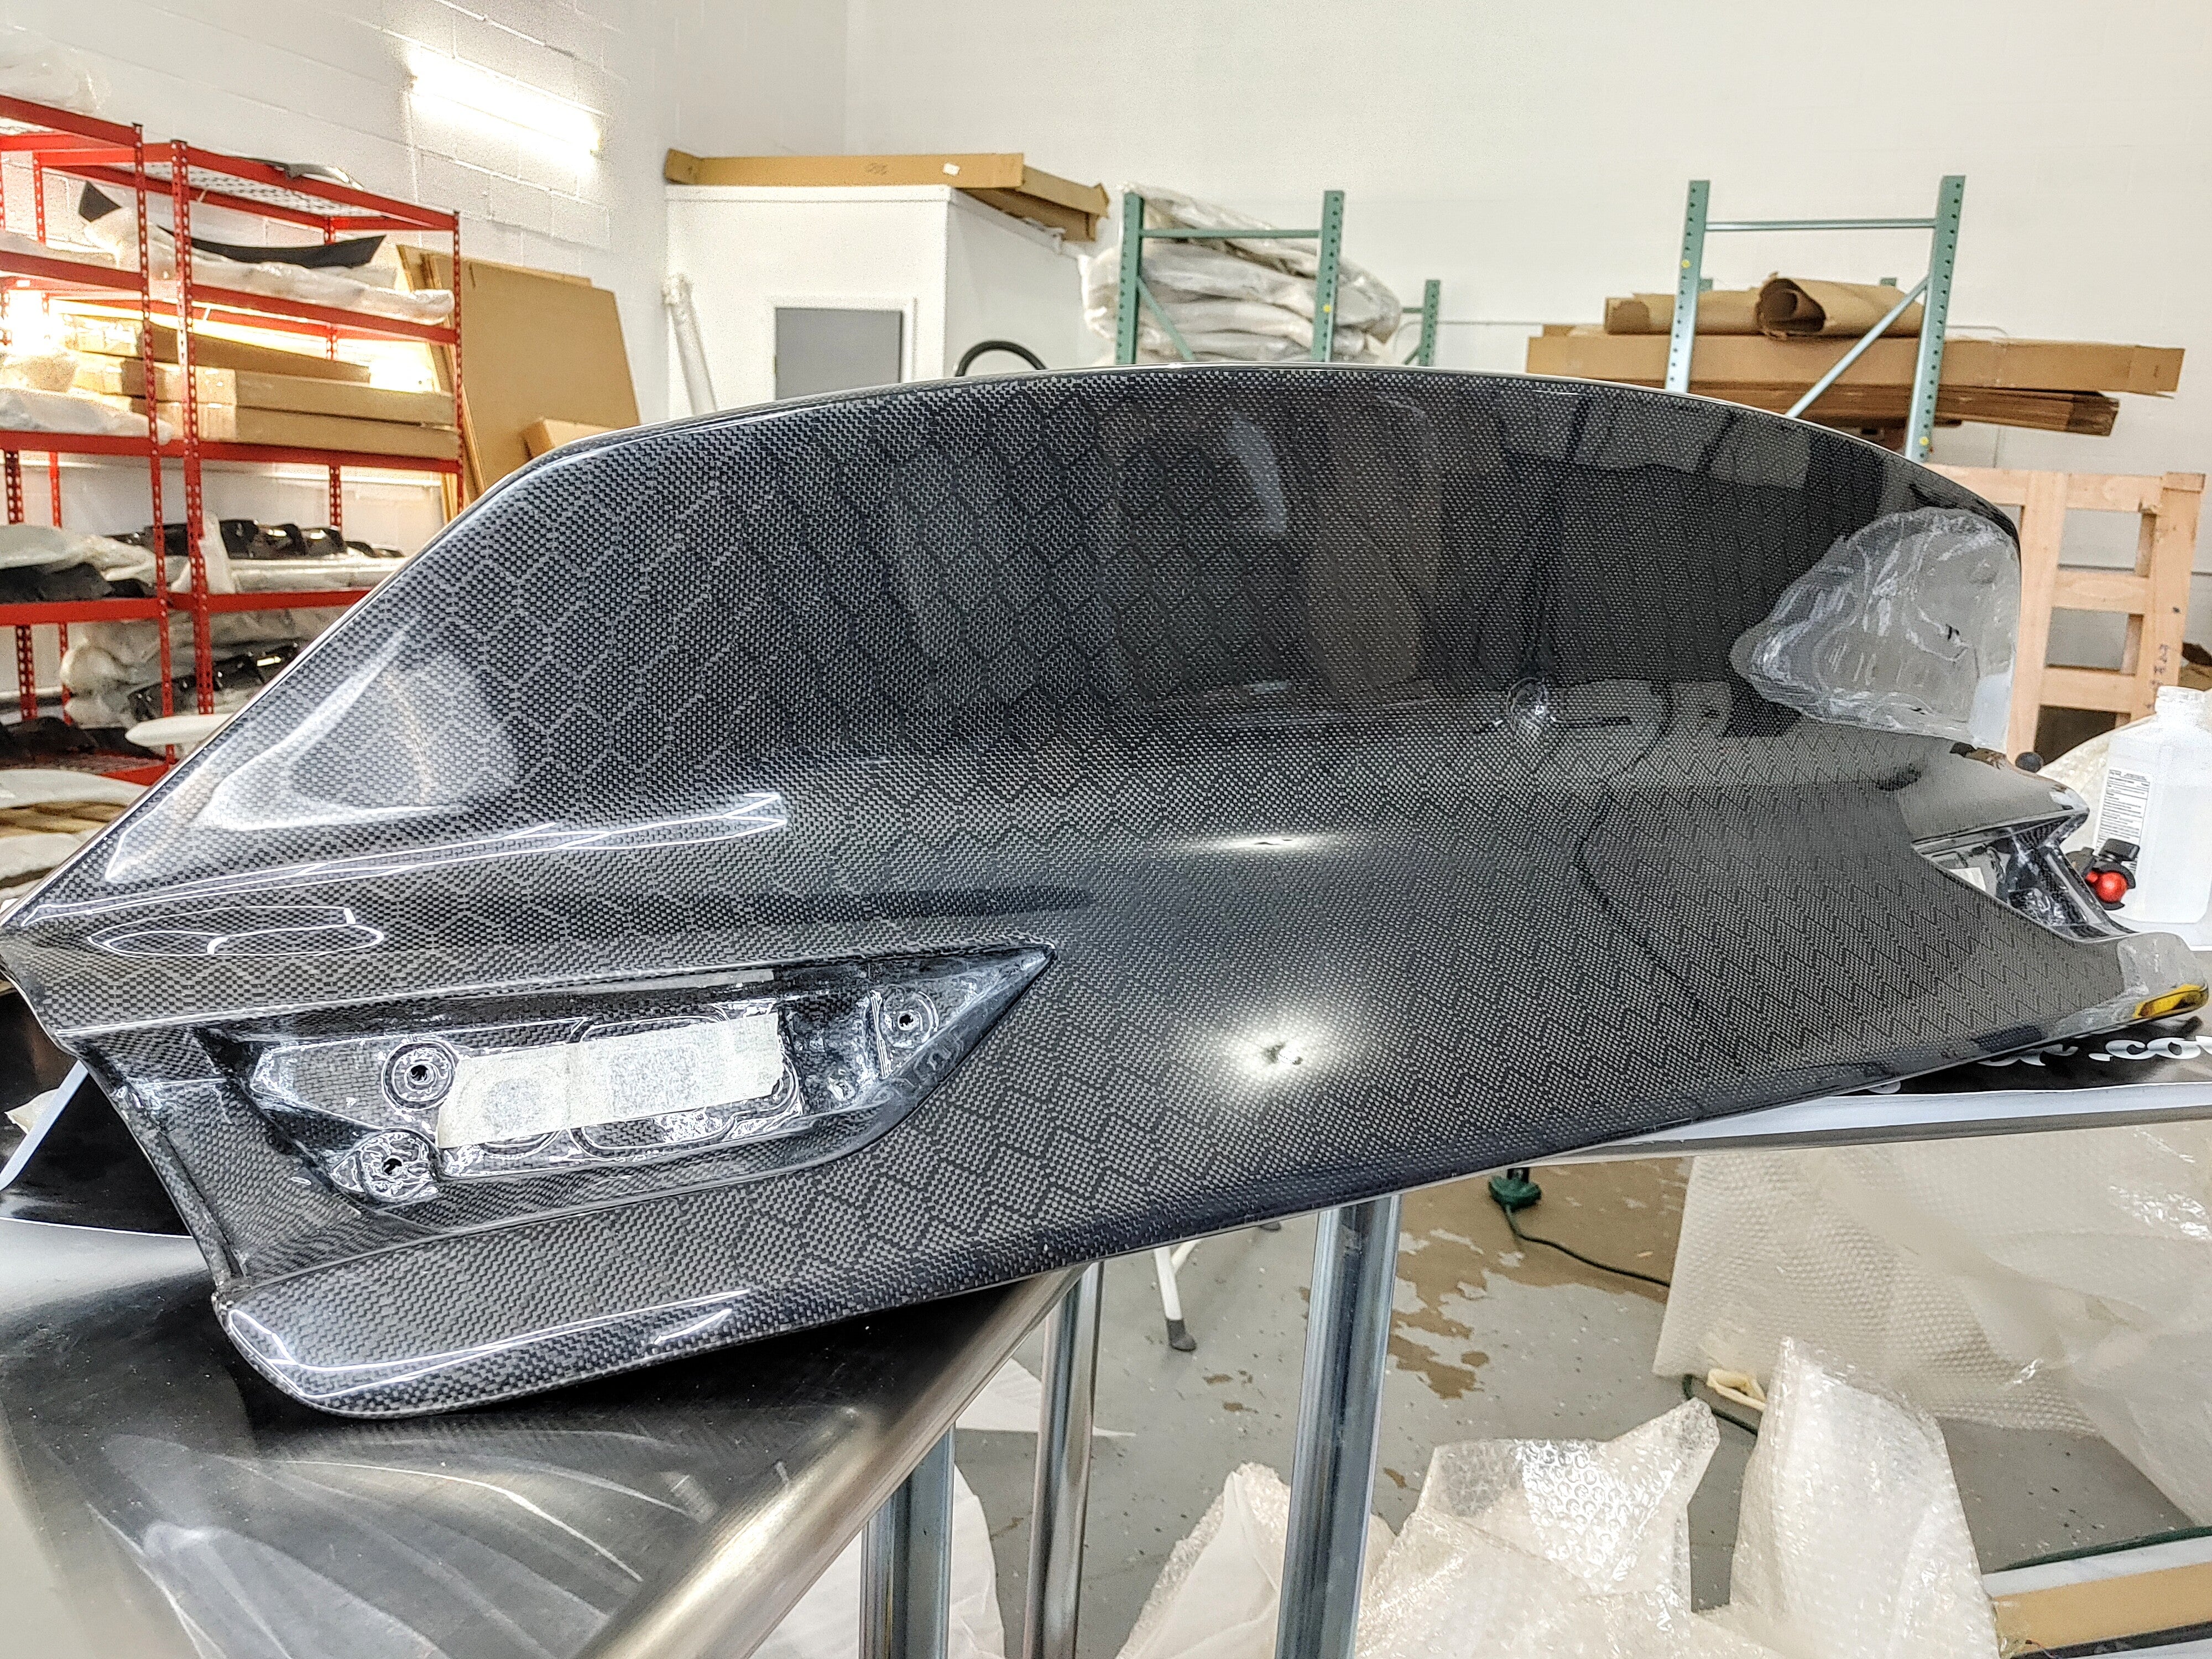 Jalisco's Q60 Duckbill Trunk in pre-installation phase, highlighting its sleek carbon fiber texture